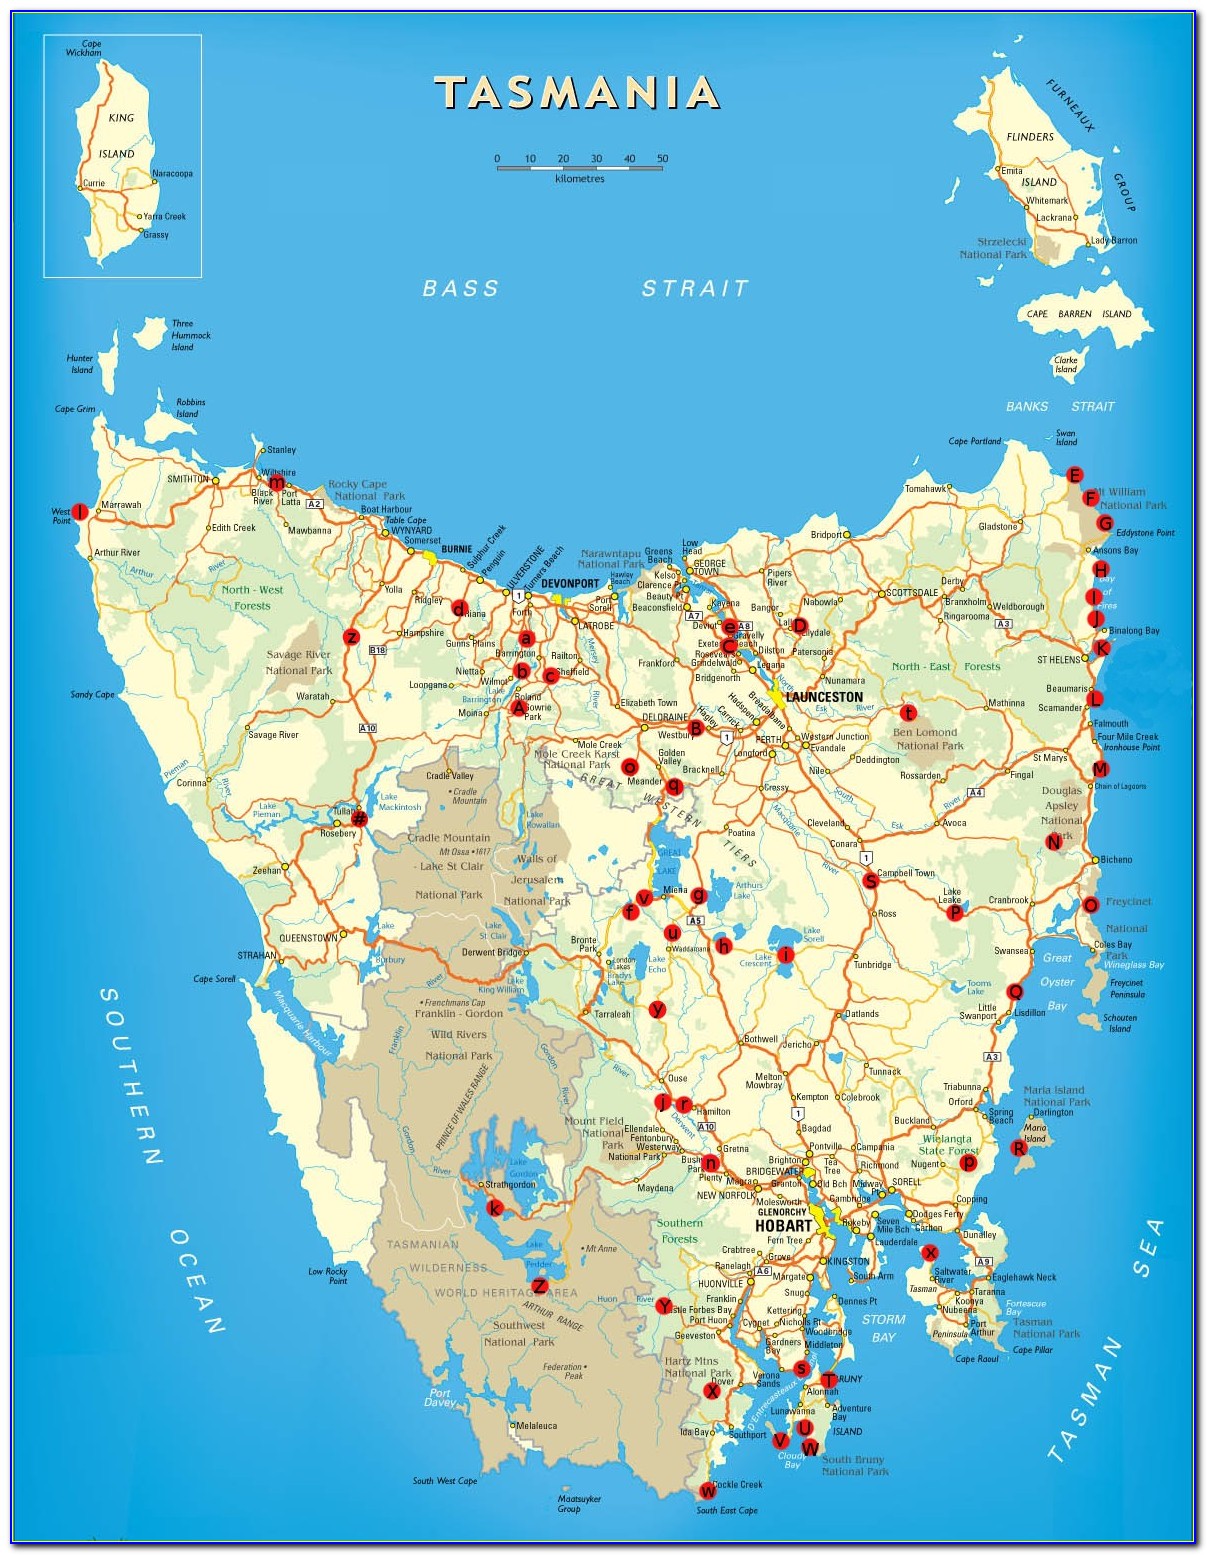 Tasmania Travel And Touring Map